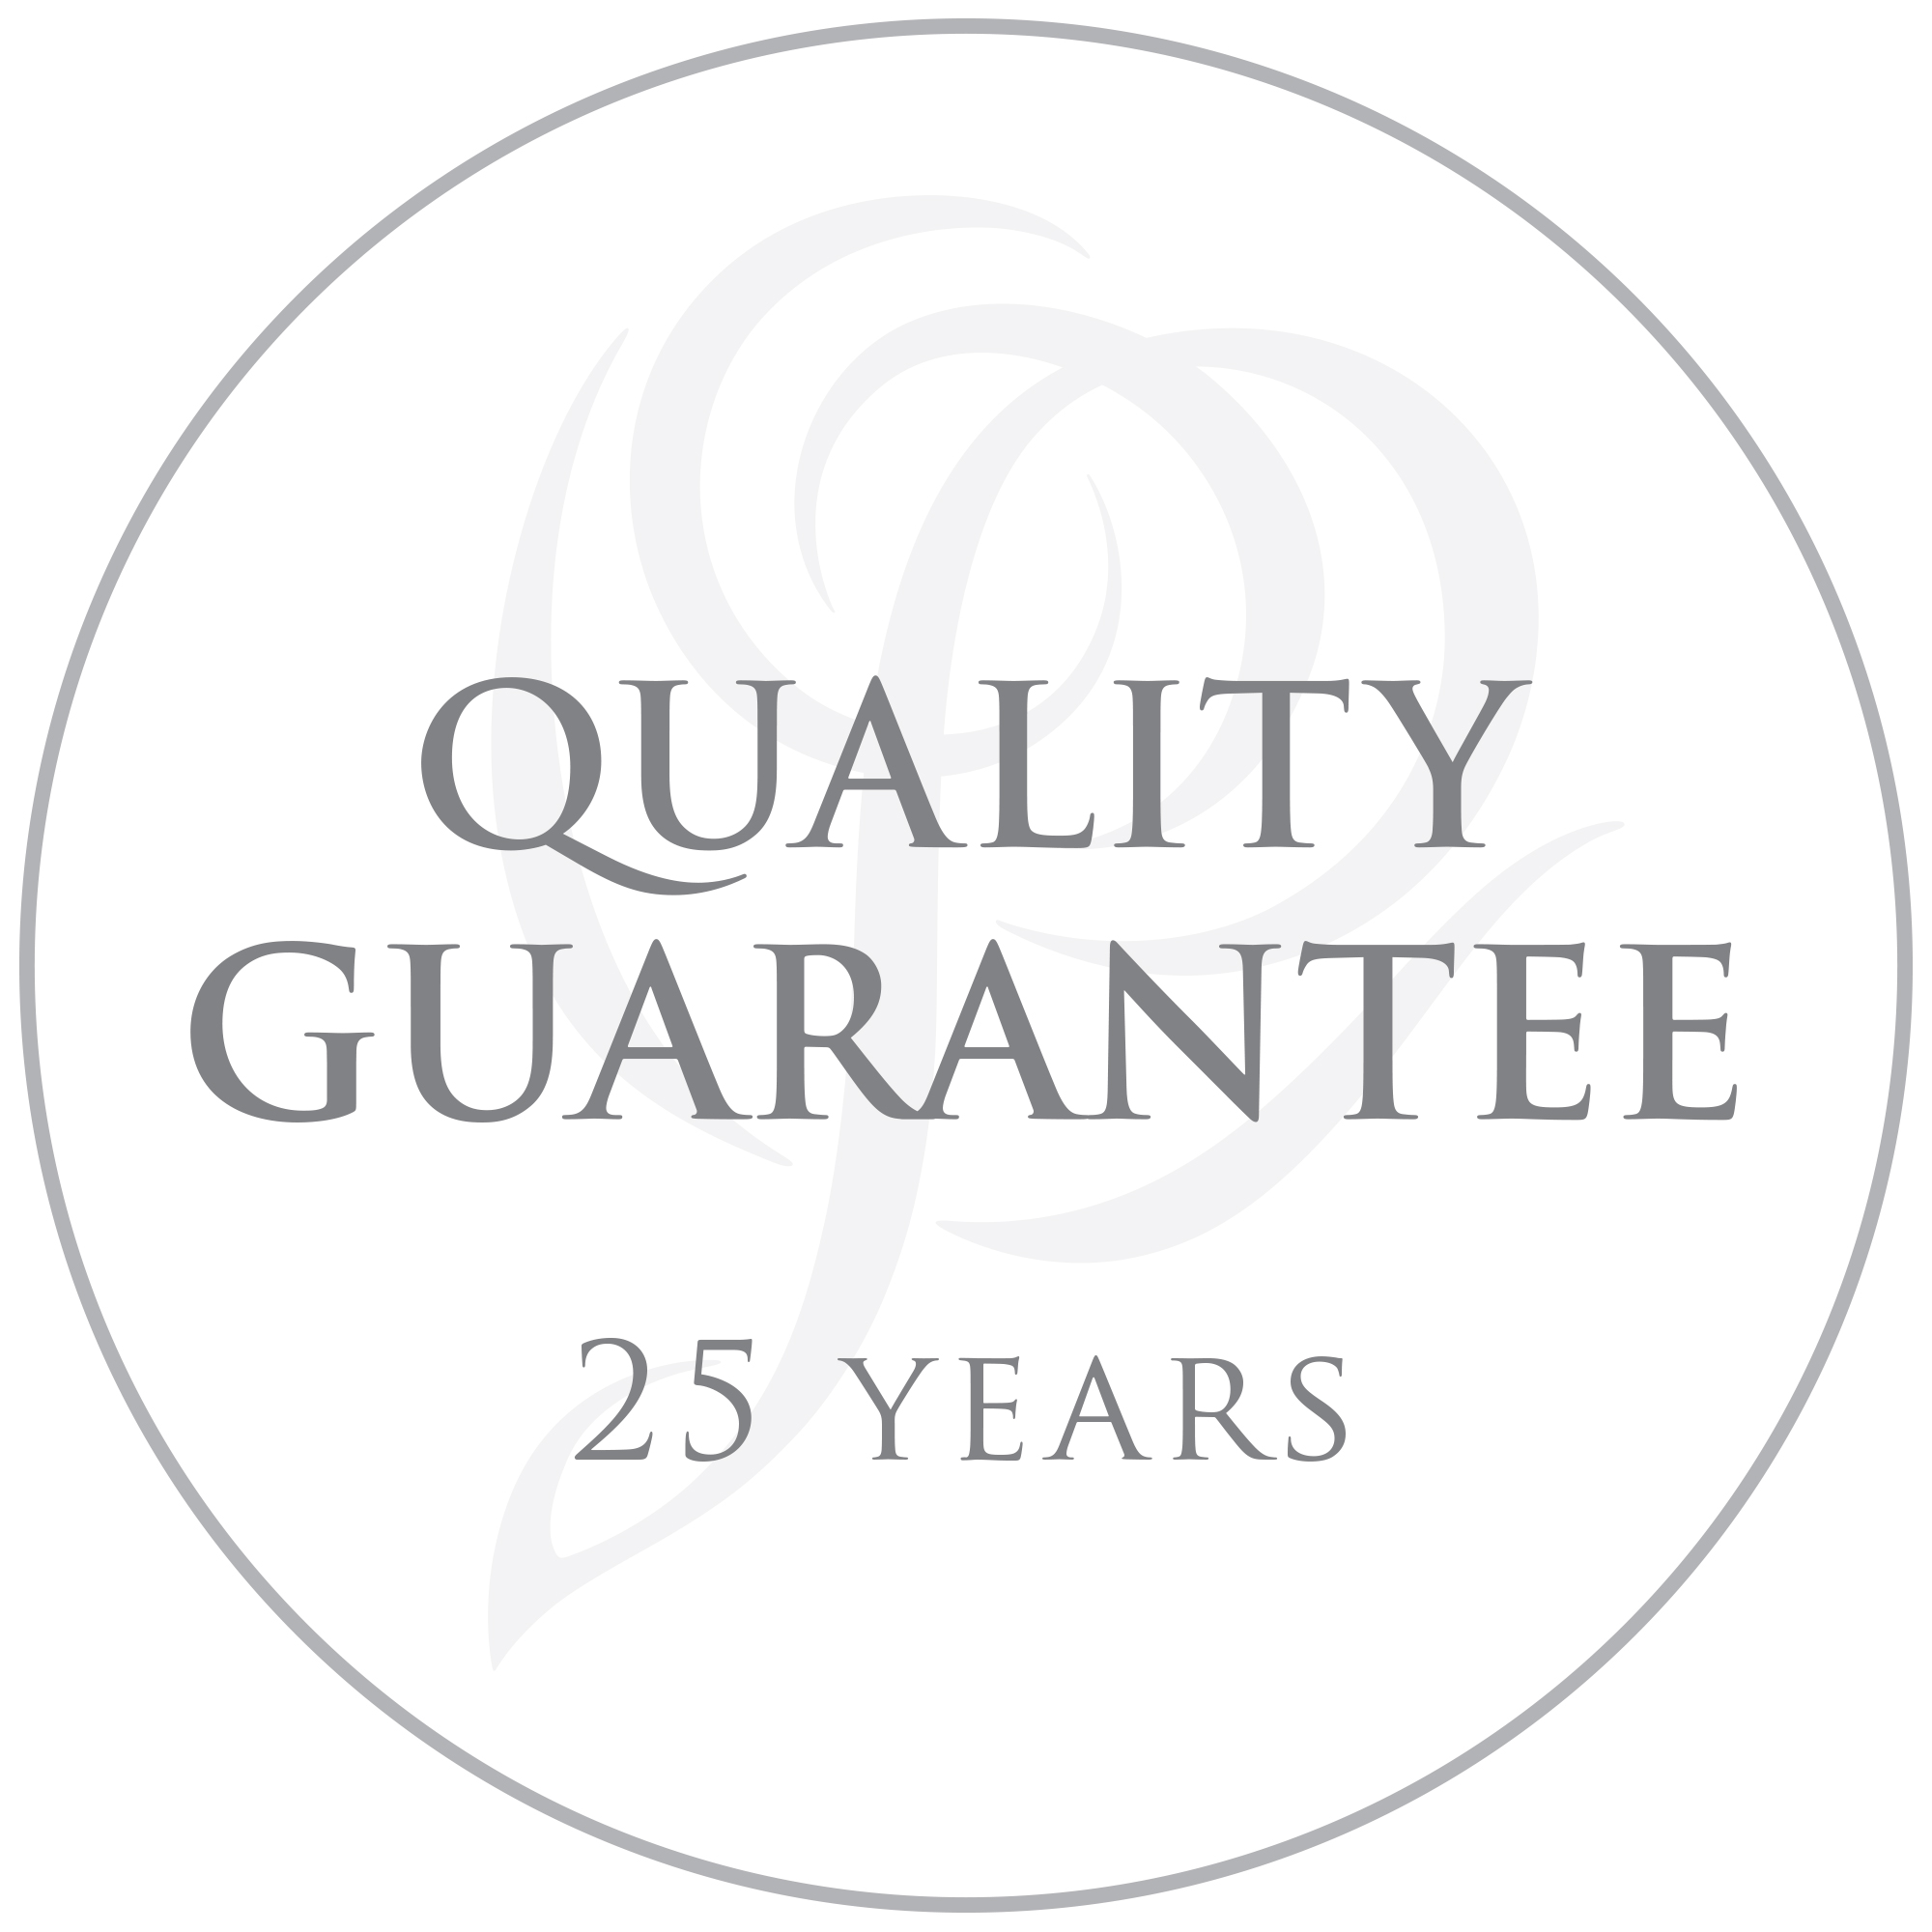 Quality-Guarantee-Logos-2022-2000-x-2000px-25-years